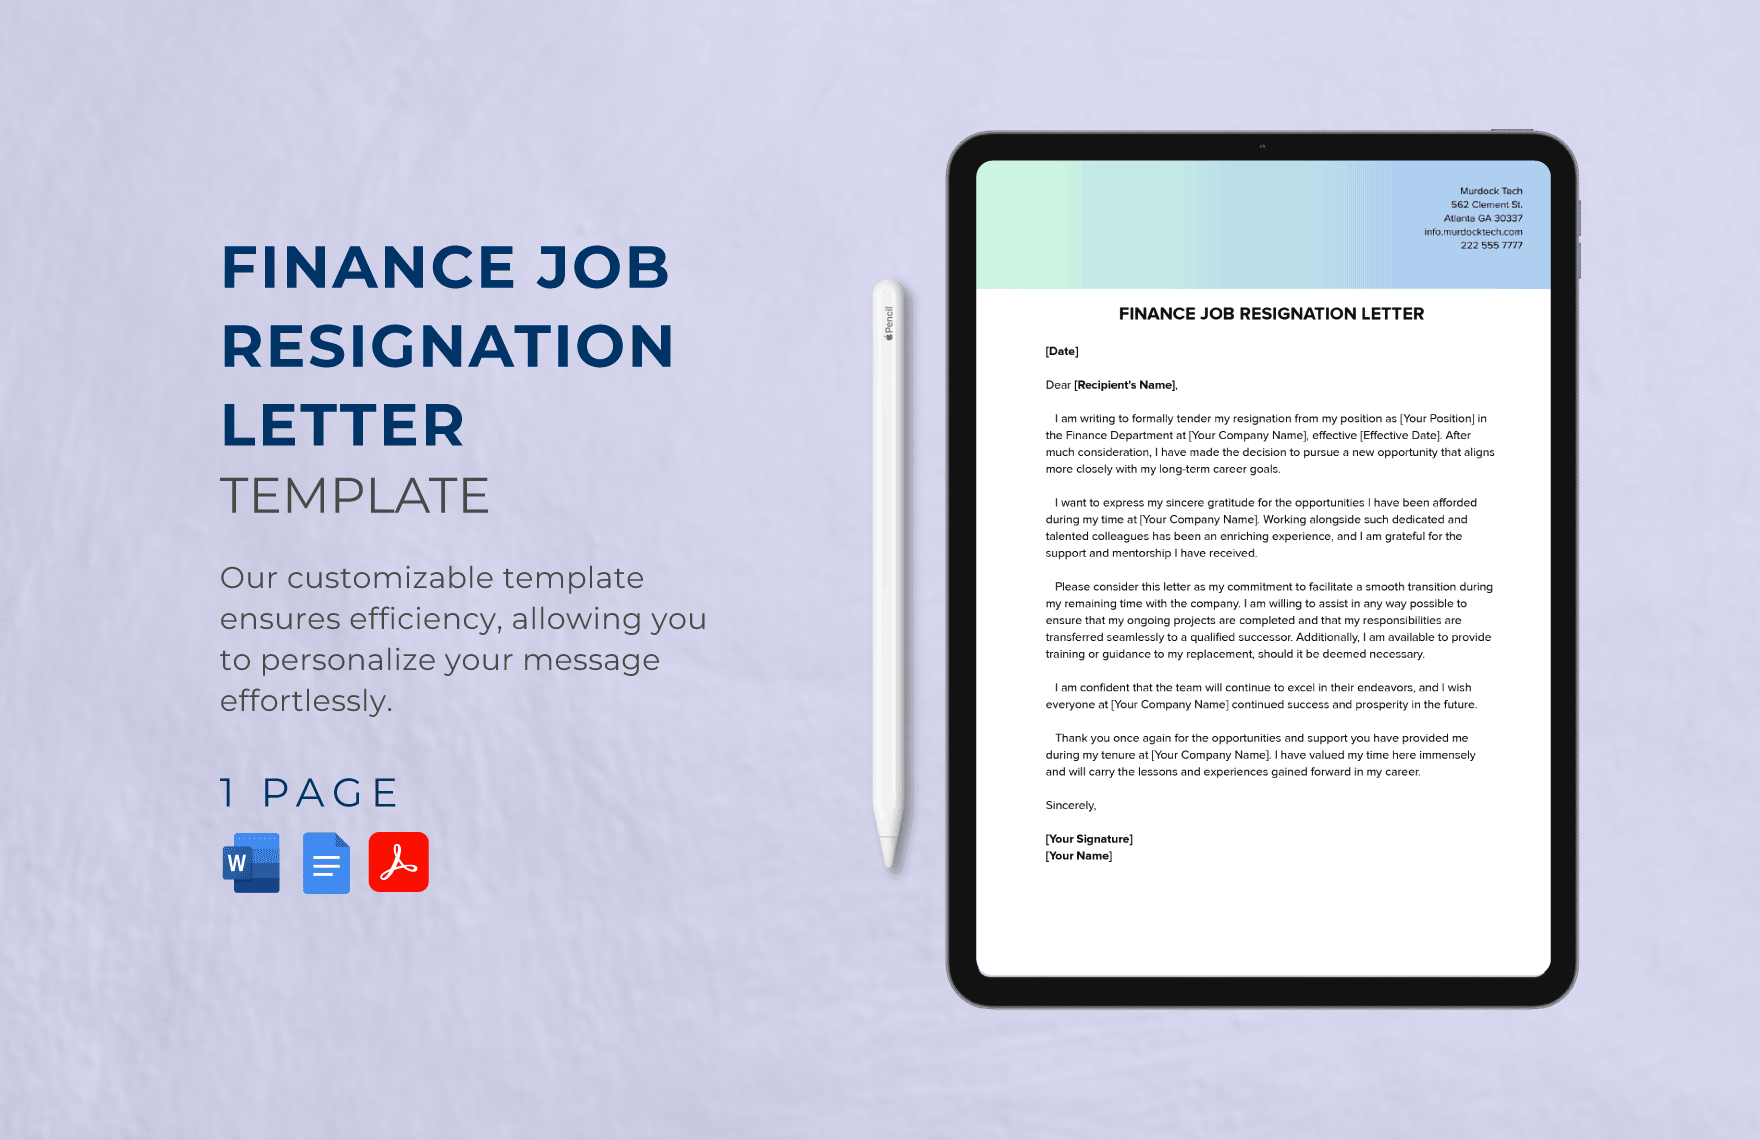 Finance Job Resignation Letter Template in Word, Google Docs, PDF